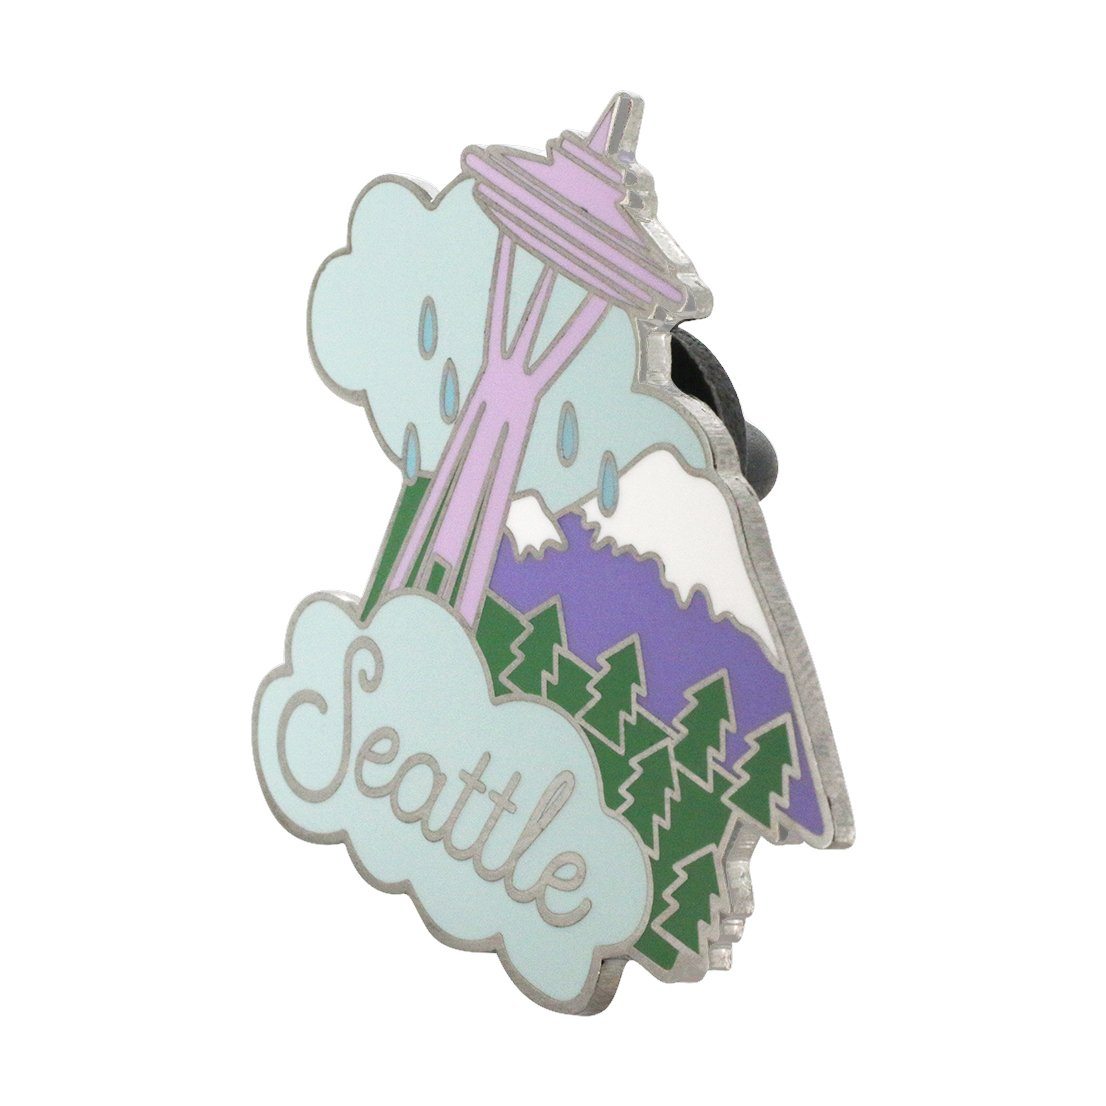 Seattle Space Needle Mount Rainier Souvenir Pin Pin WizardPins 5 Pins 